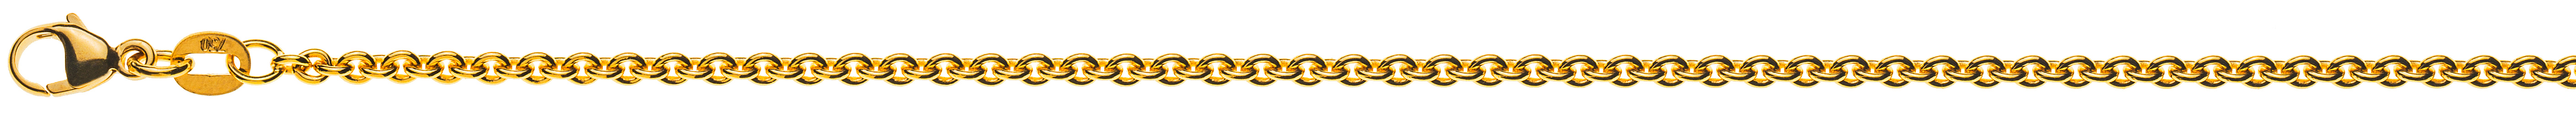 AURONOS Prestige Necklace Yellow Gold 18K Round Anchor 40cm 2.3mm